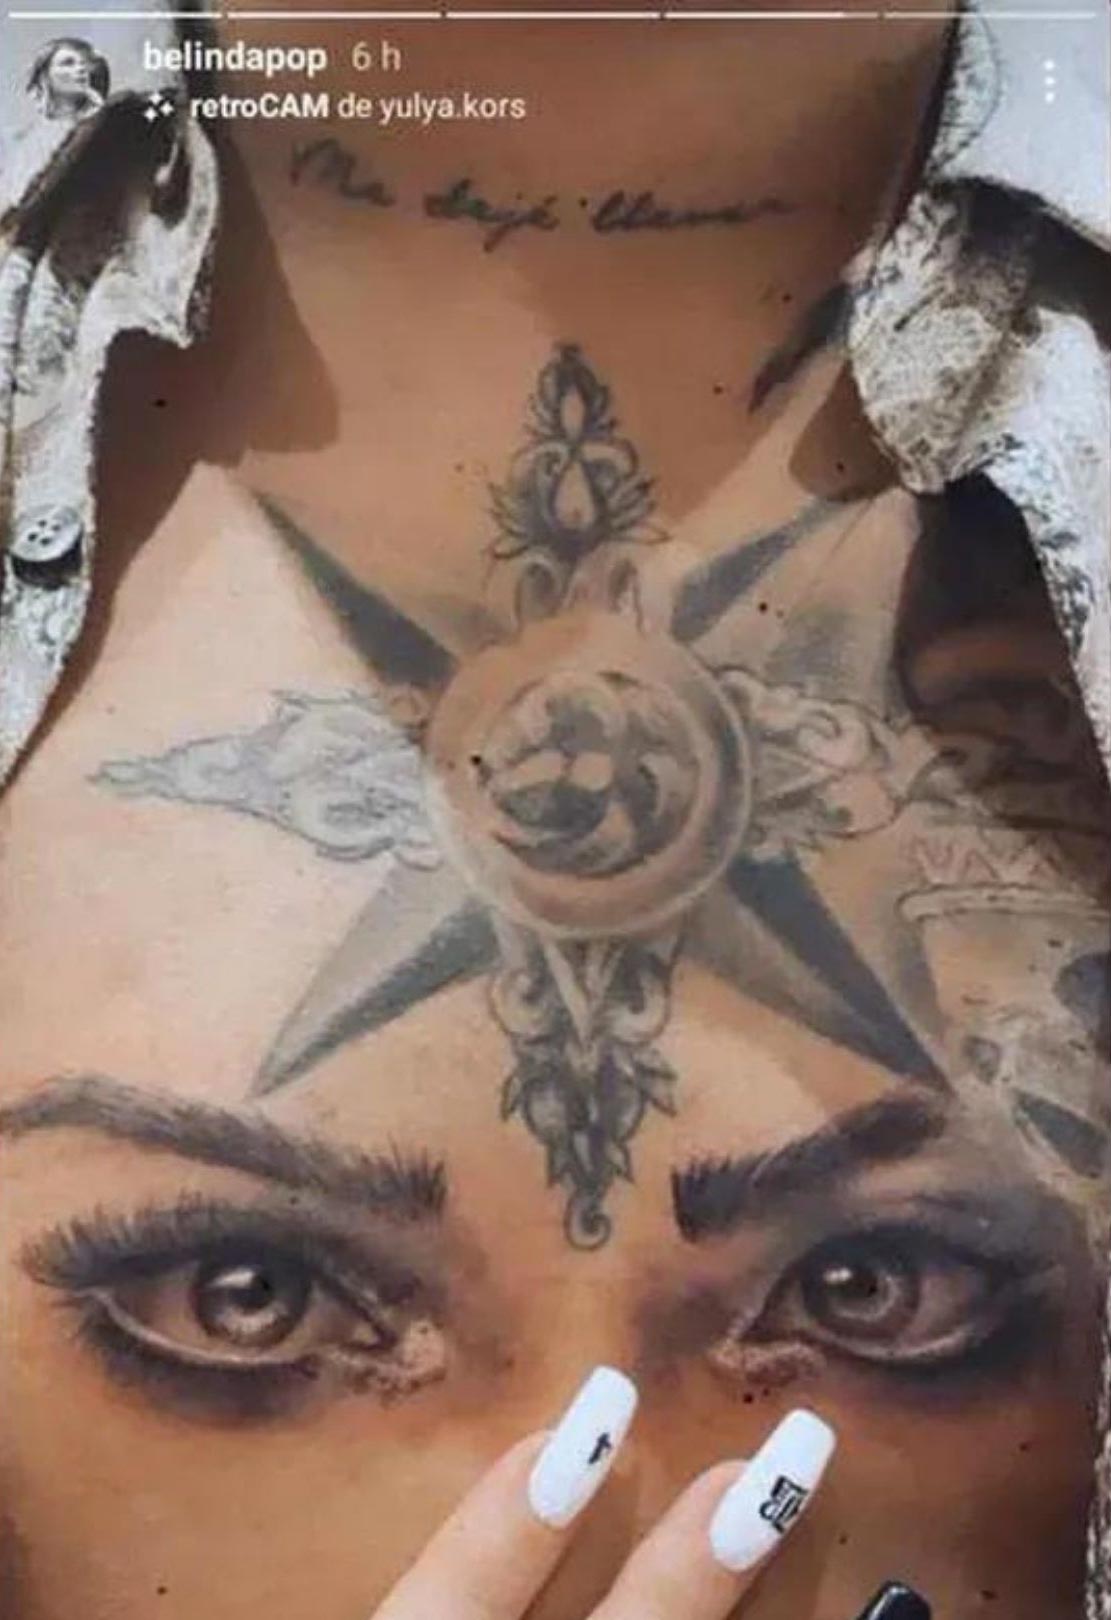 christian nodal tatuaje ojos-belinda